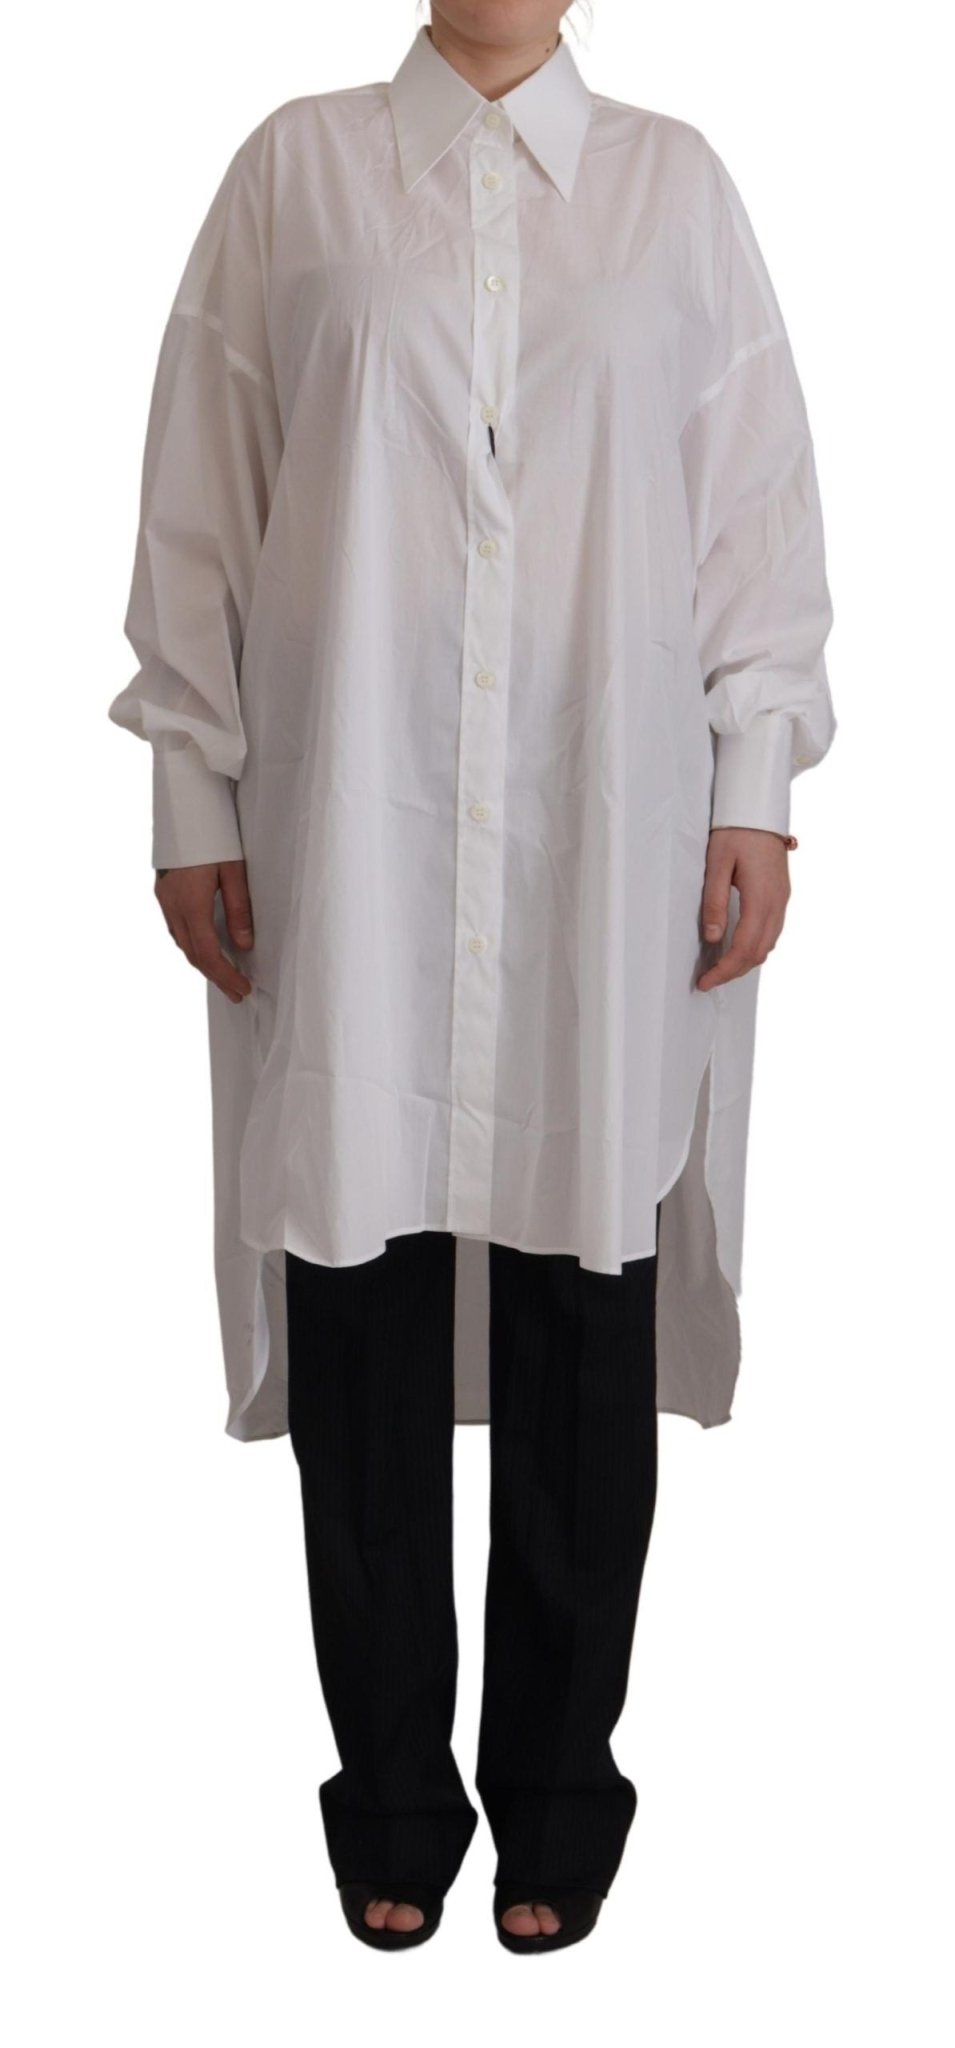 Dolce & Gabbana White Weave Long Sleeves Collared Blouse Shirt